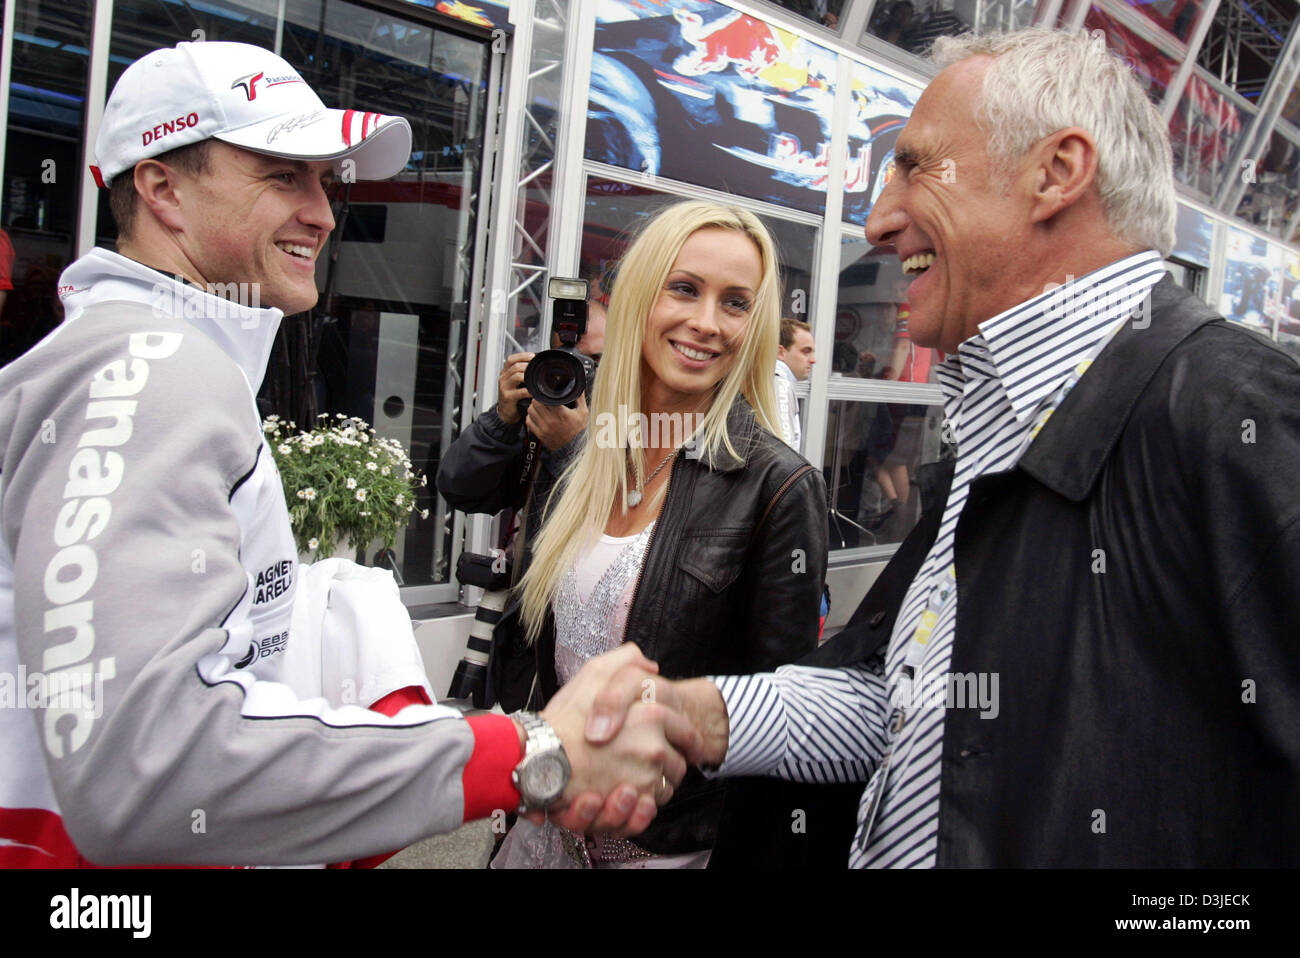 Austrian billionaire Dietrich Mateschitz greets German Formula One driver Ralf Schumacher of Toyota and his wife Cora Schumacher with a handshake